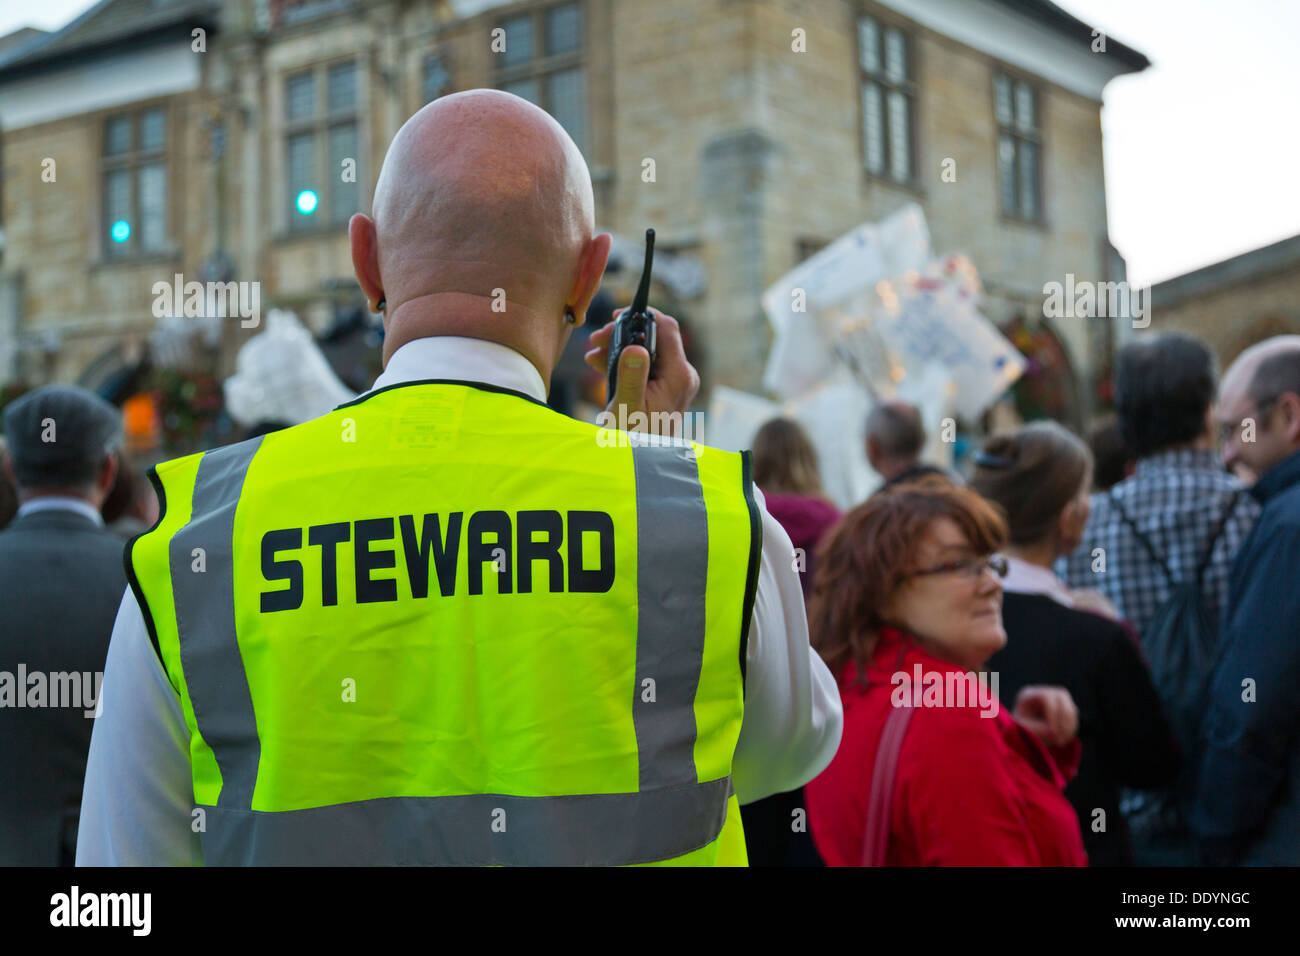 Bald male man steward talking on walkie talkie at event Stock Photo